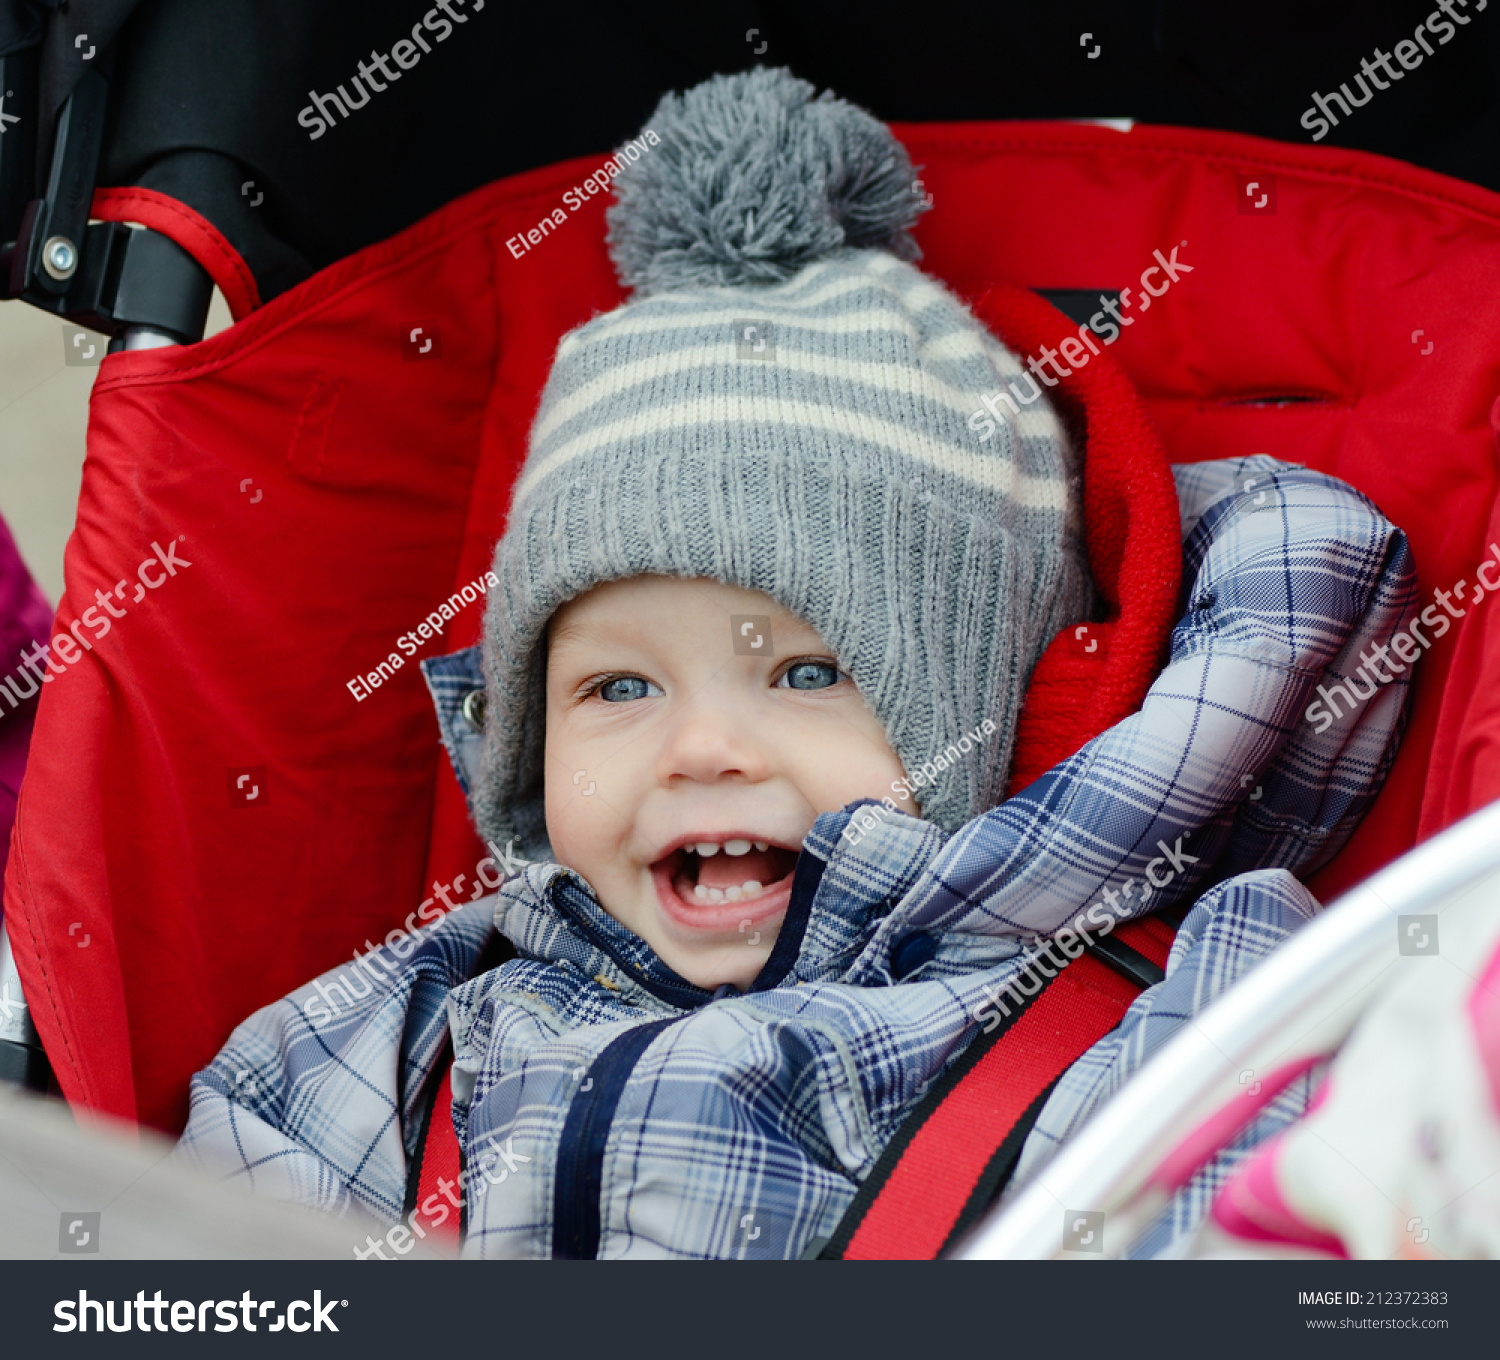 red stroller for baby boy